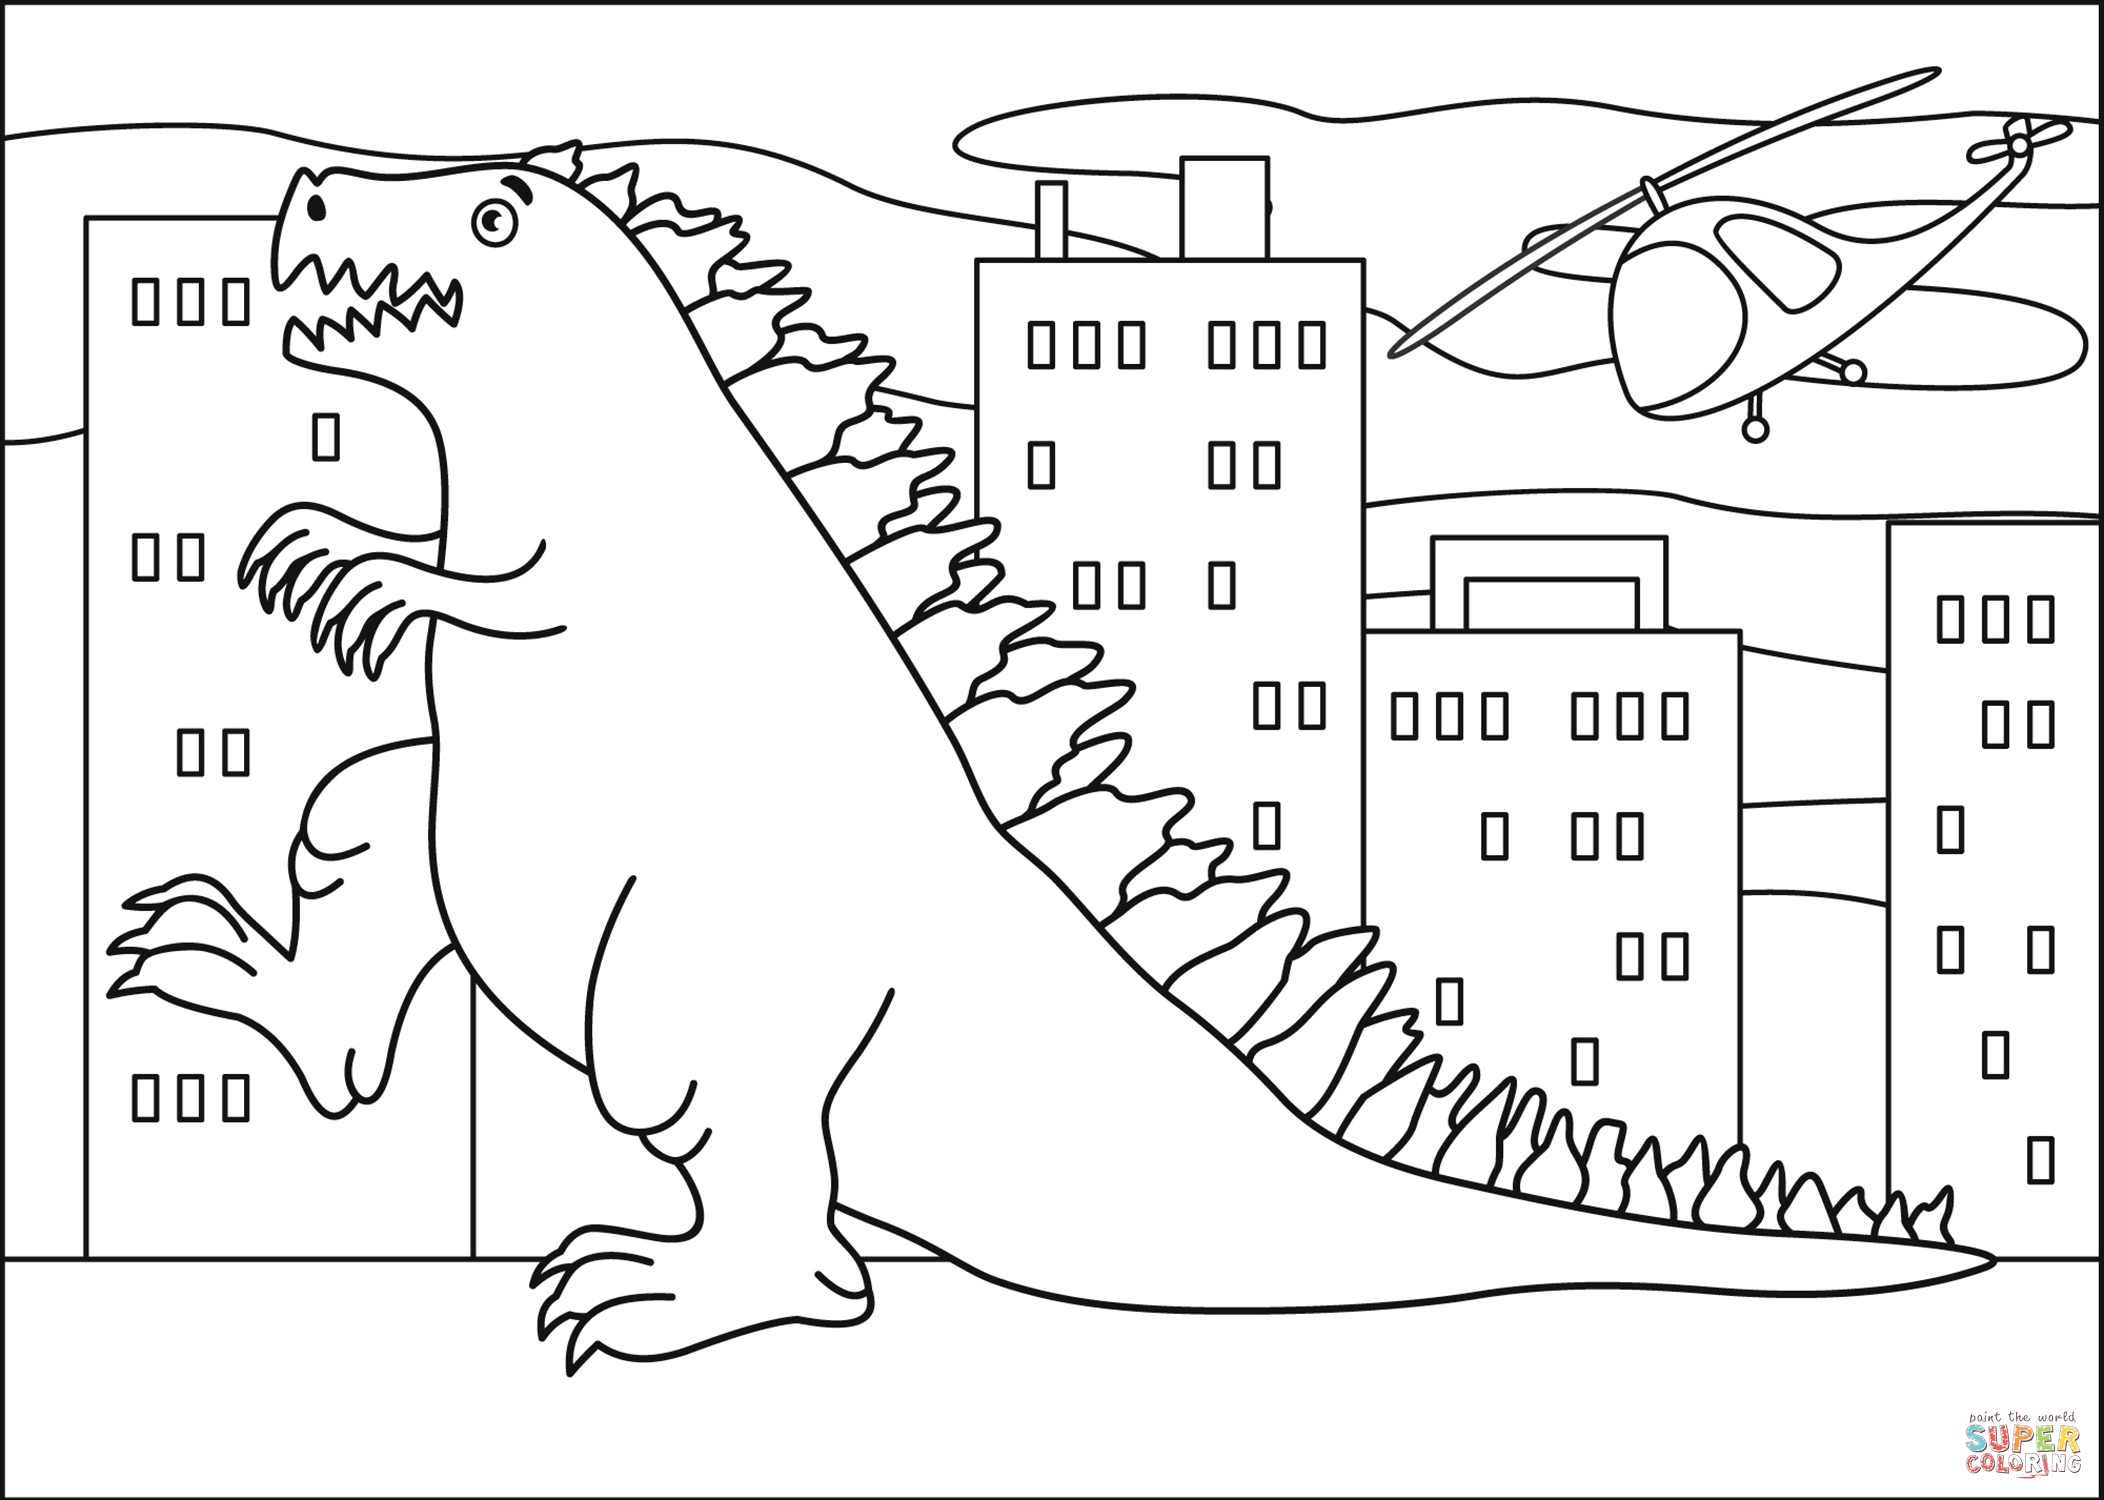 kid-friendly Godzilla coloring pages